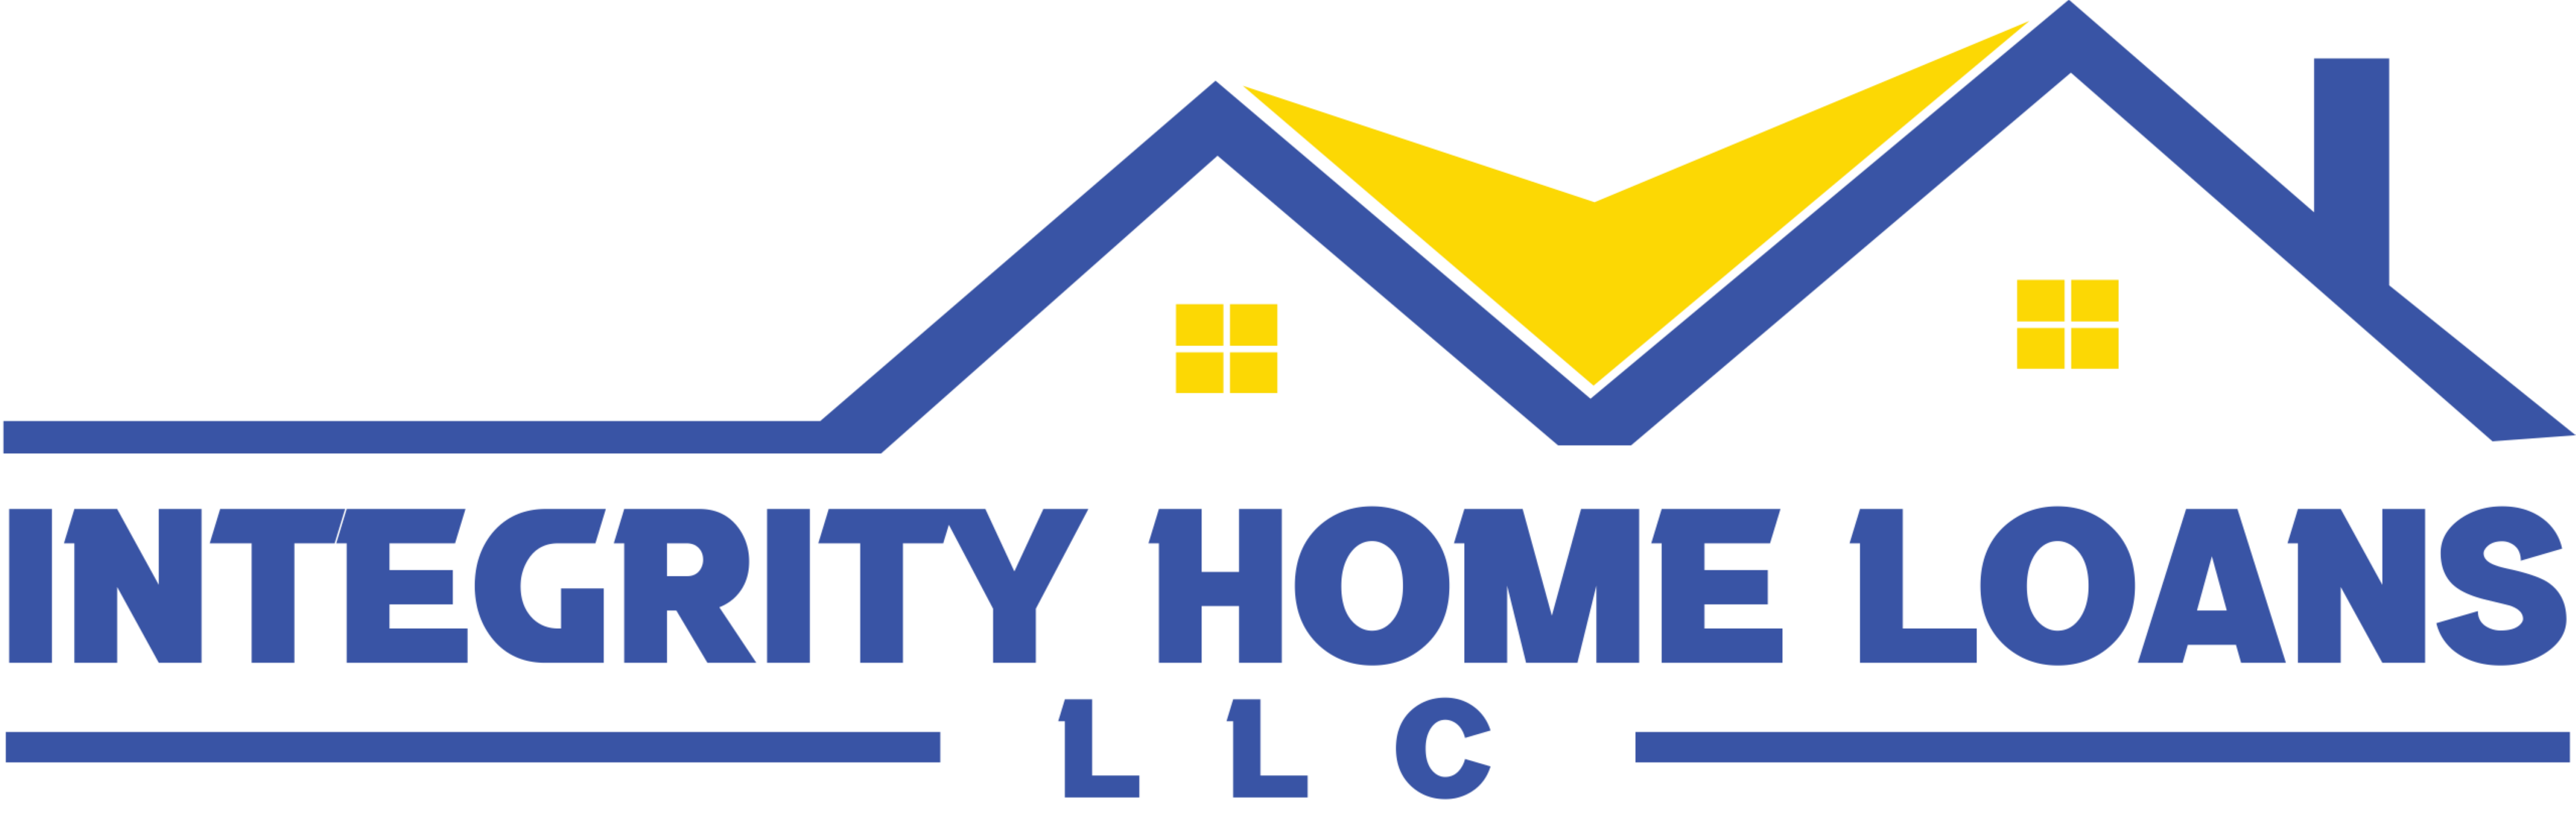 Integrity Home Loans LLC  logo